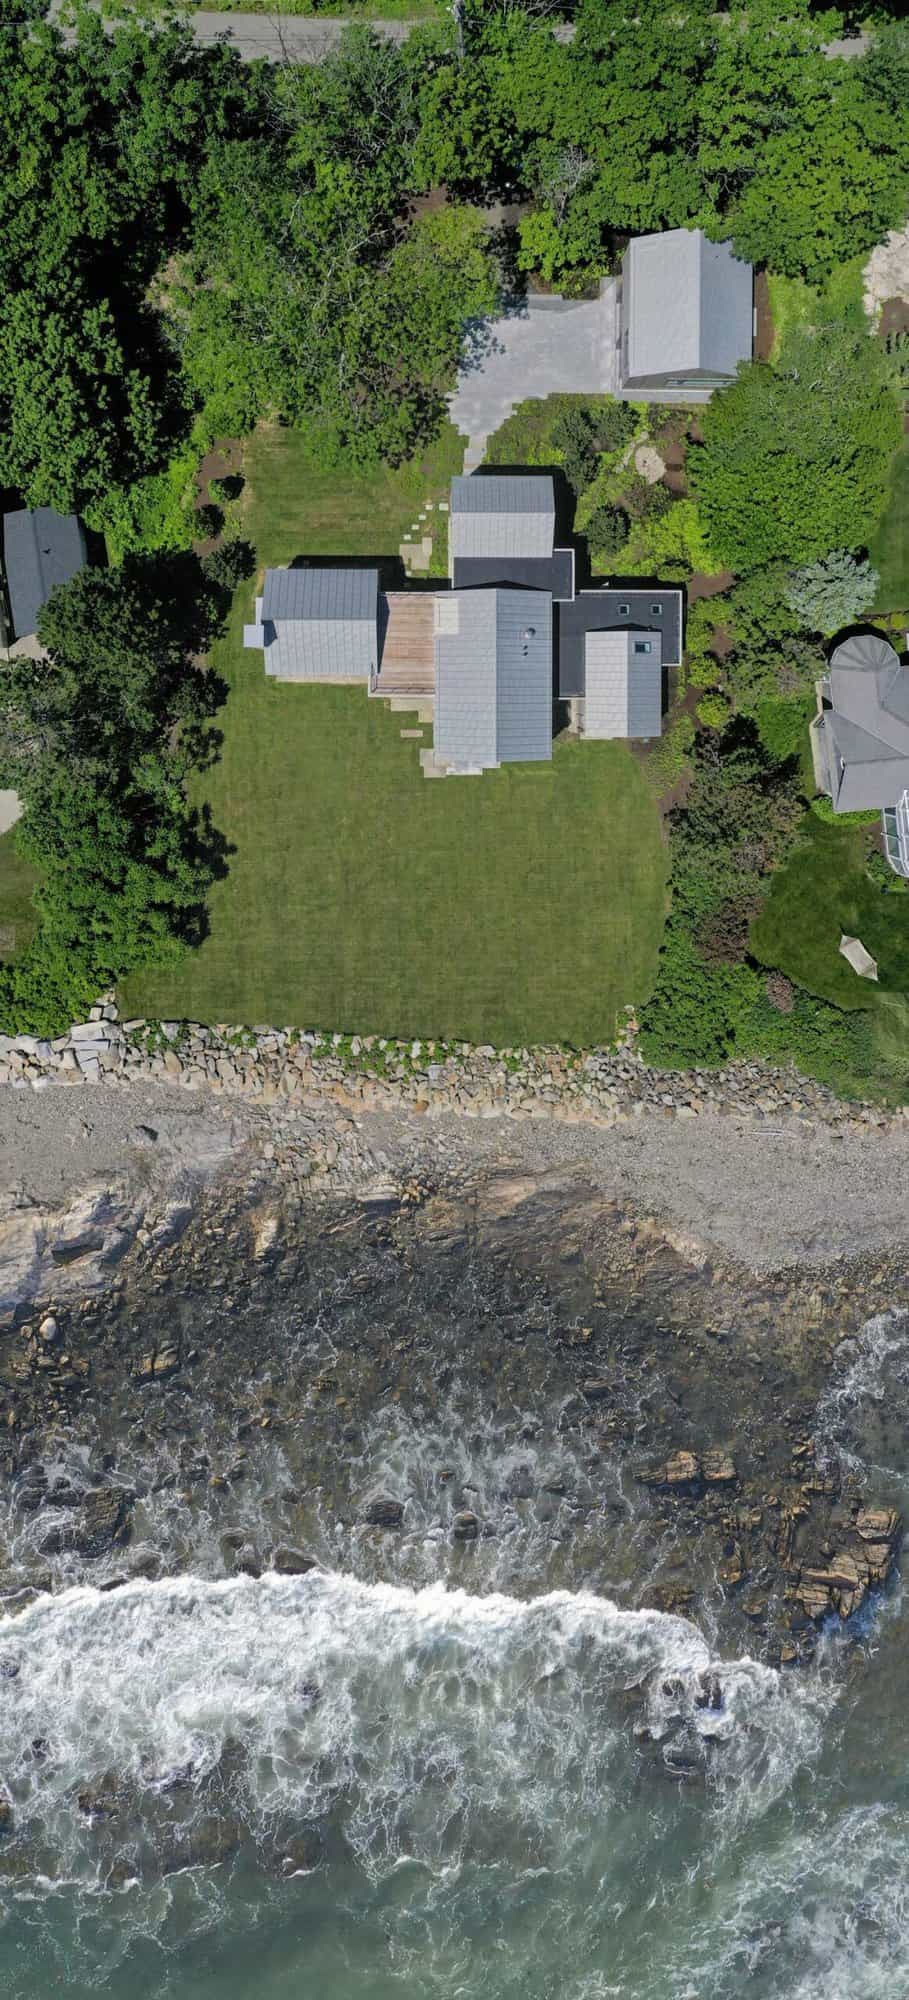 modern-coastal-house-exterior-aerial-view